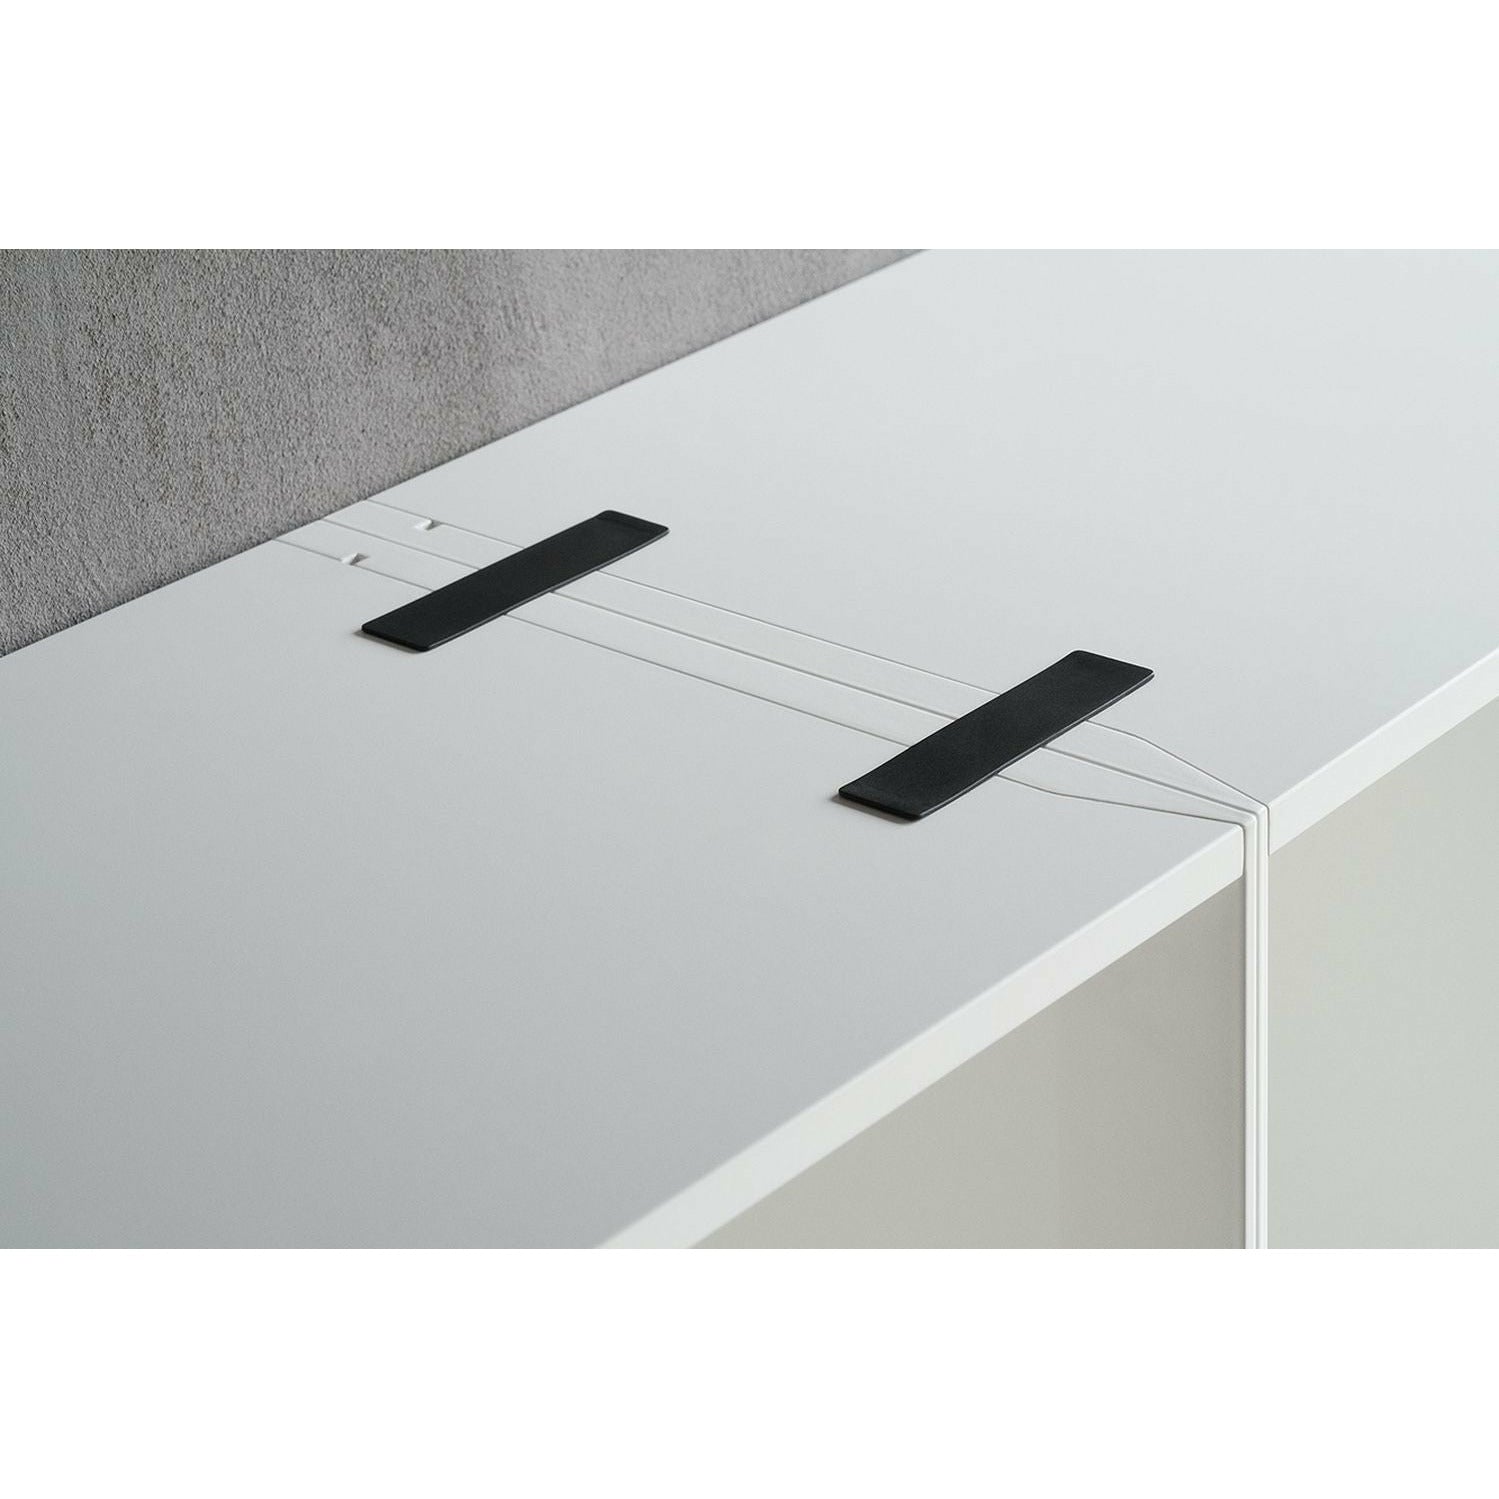 Piure Nex pur plank deur top met plank, hx w 211,5x50 cm